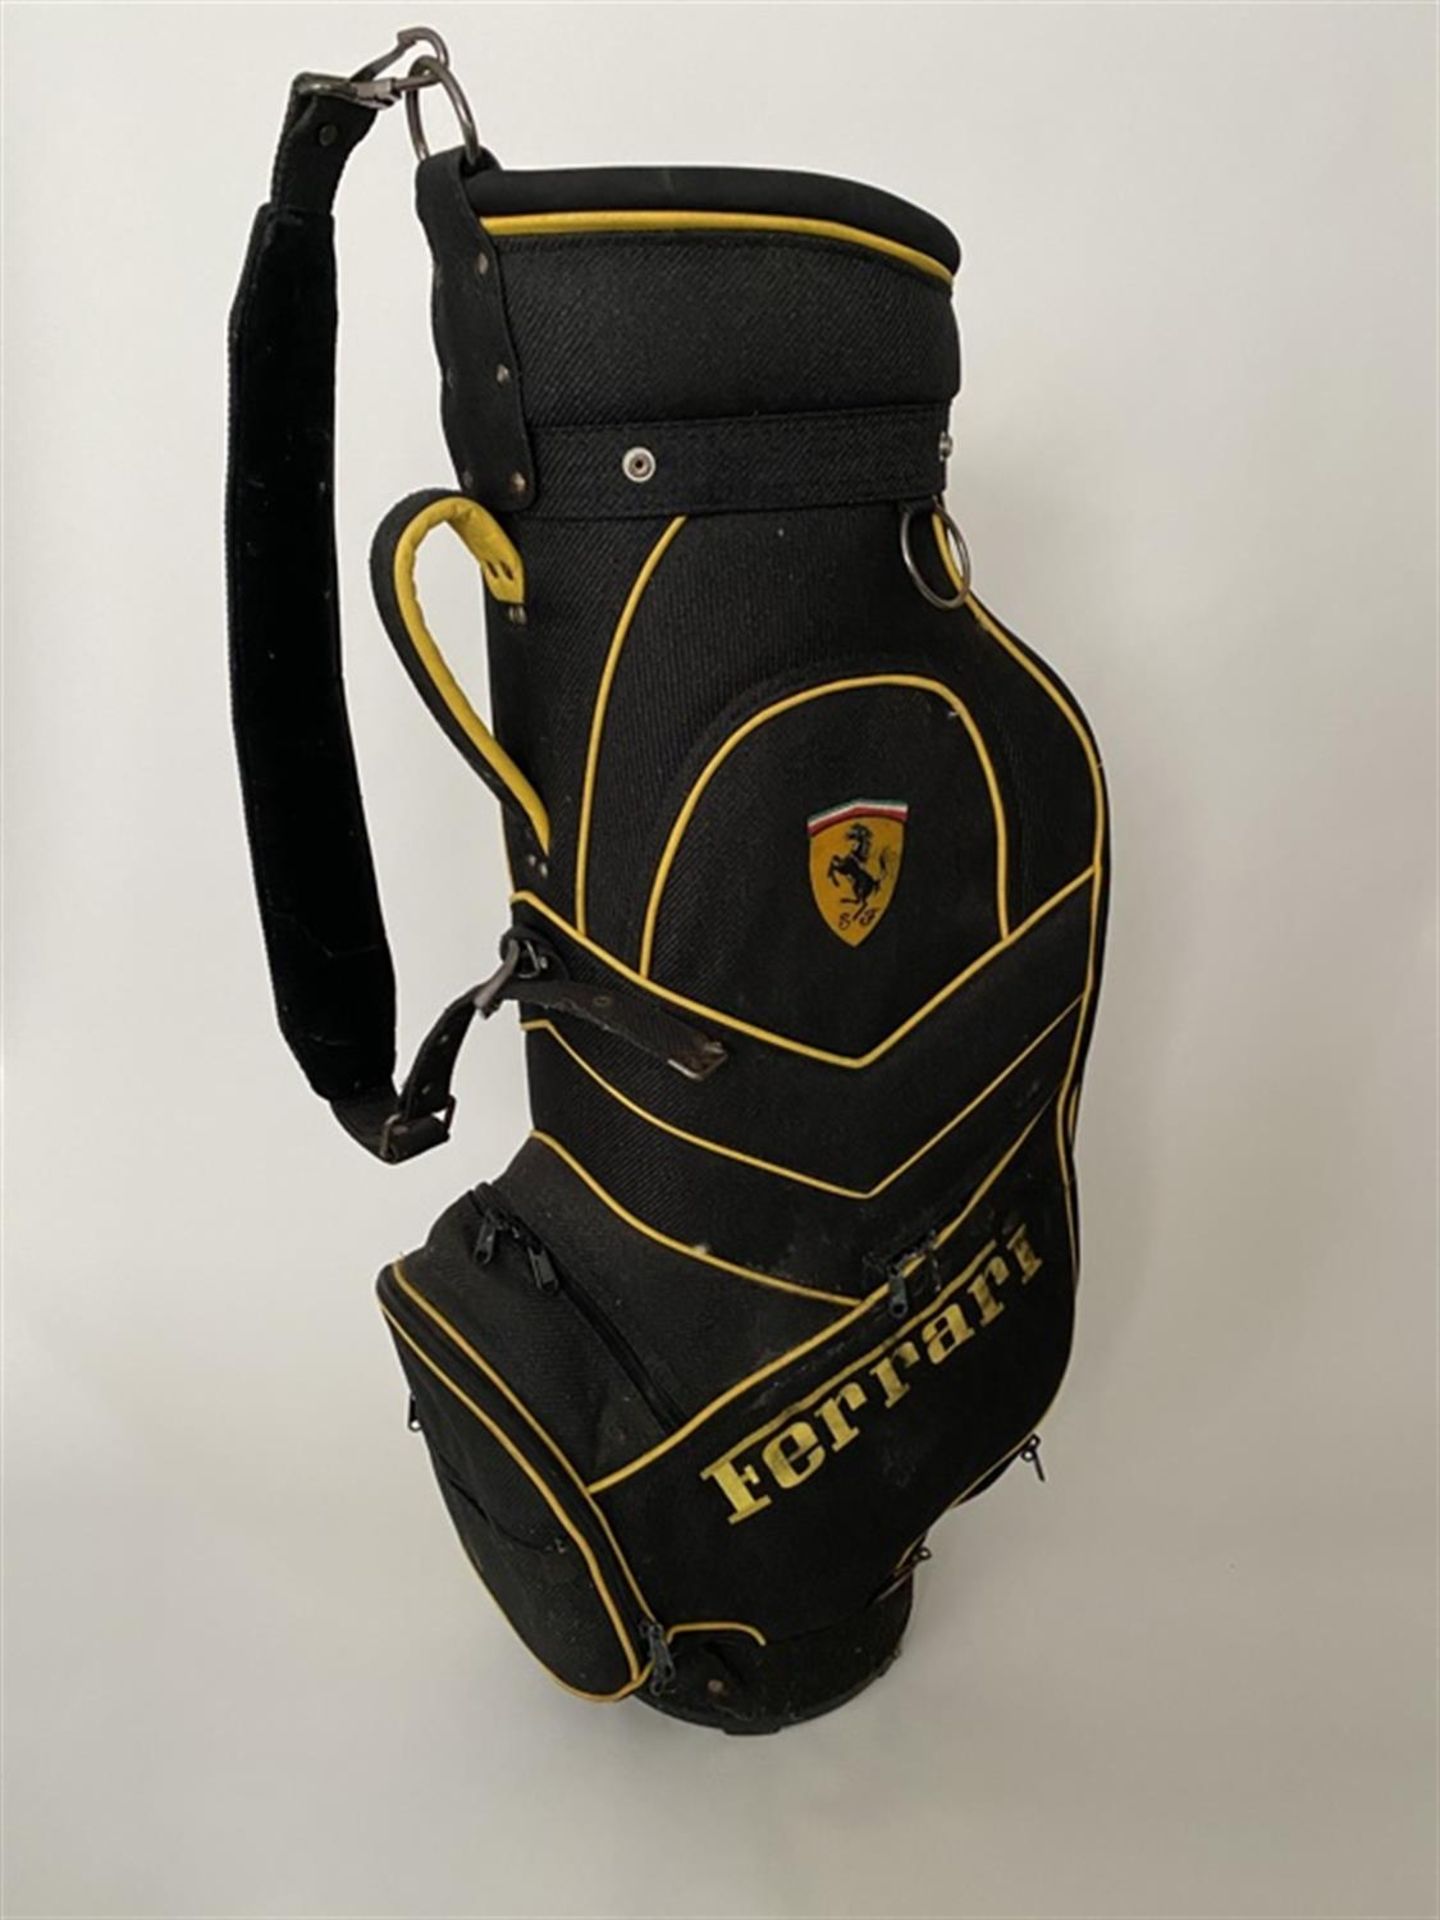 Brand New Golf Cart Bag with Ferrari Logo - Image 5 of 7